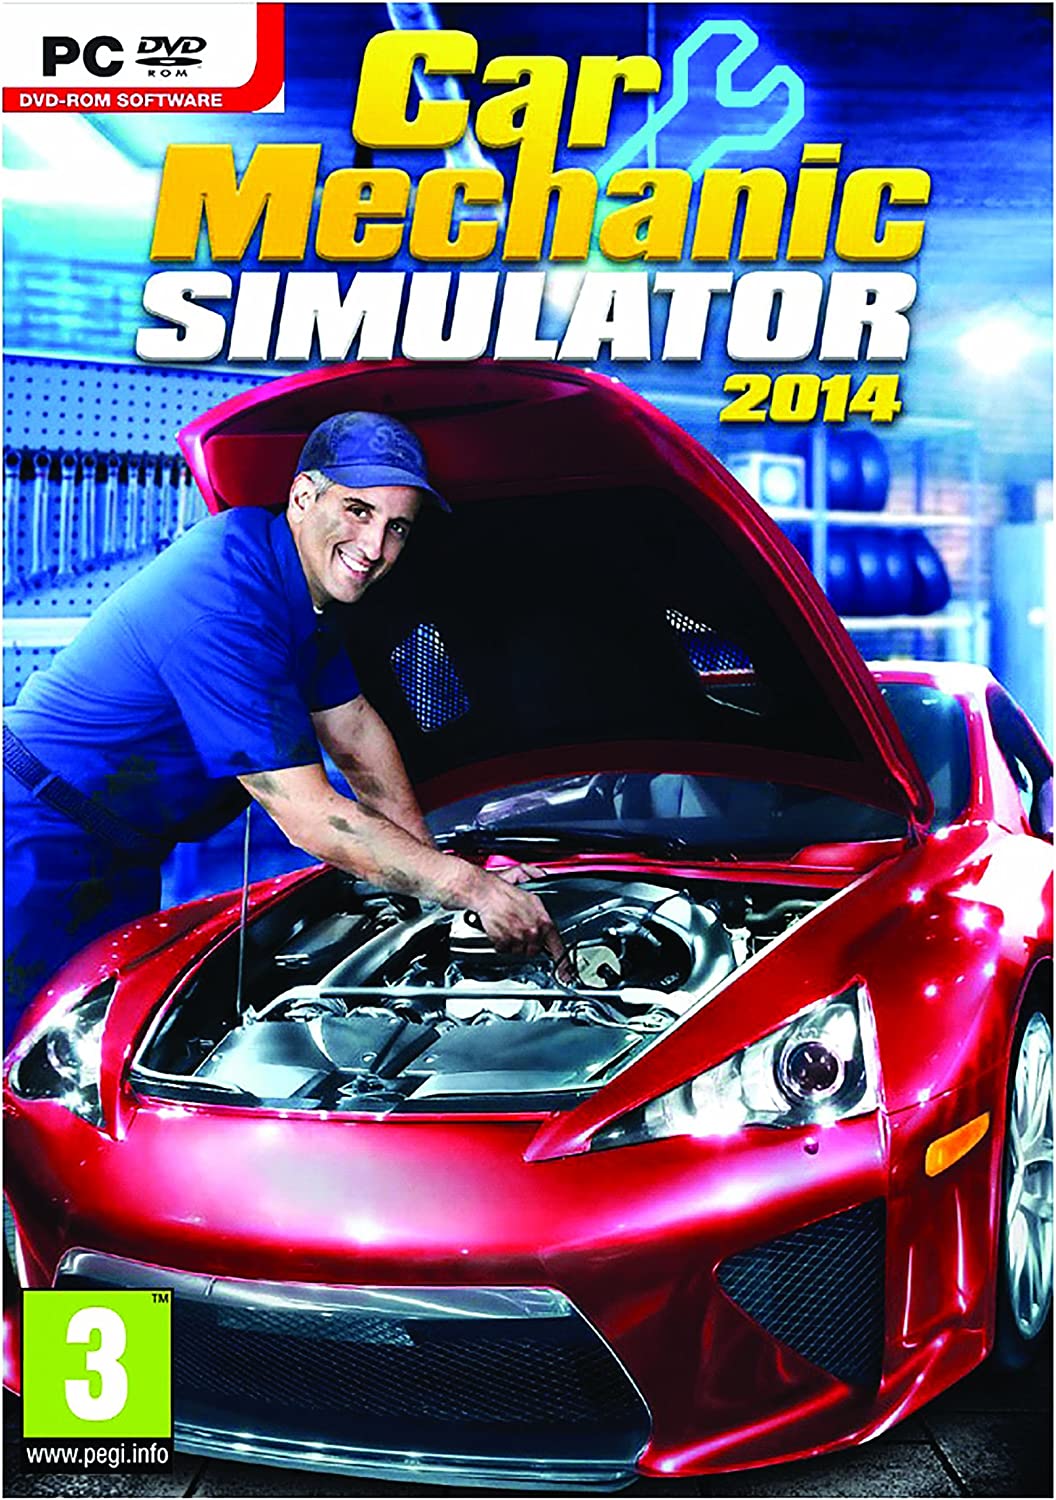 Car Mechanic Simulator 2014 (PC DVD)